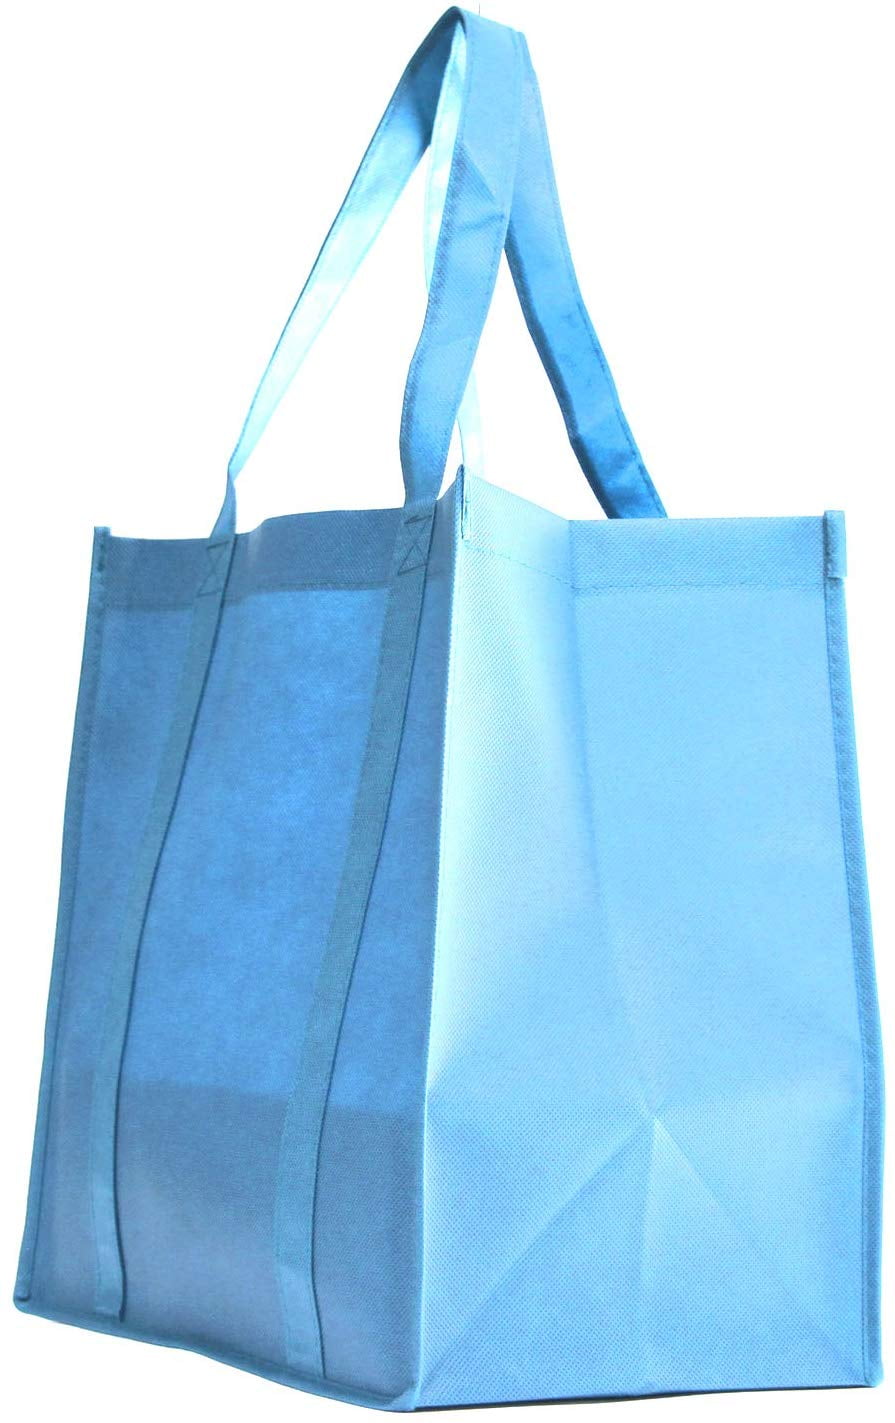 Shopping tote bag 10 oz canvas,open top grocery bag reusable bag Made in USA. 